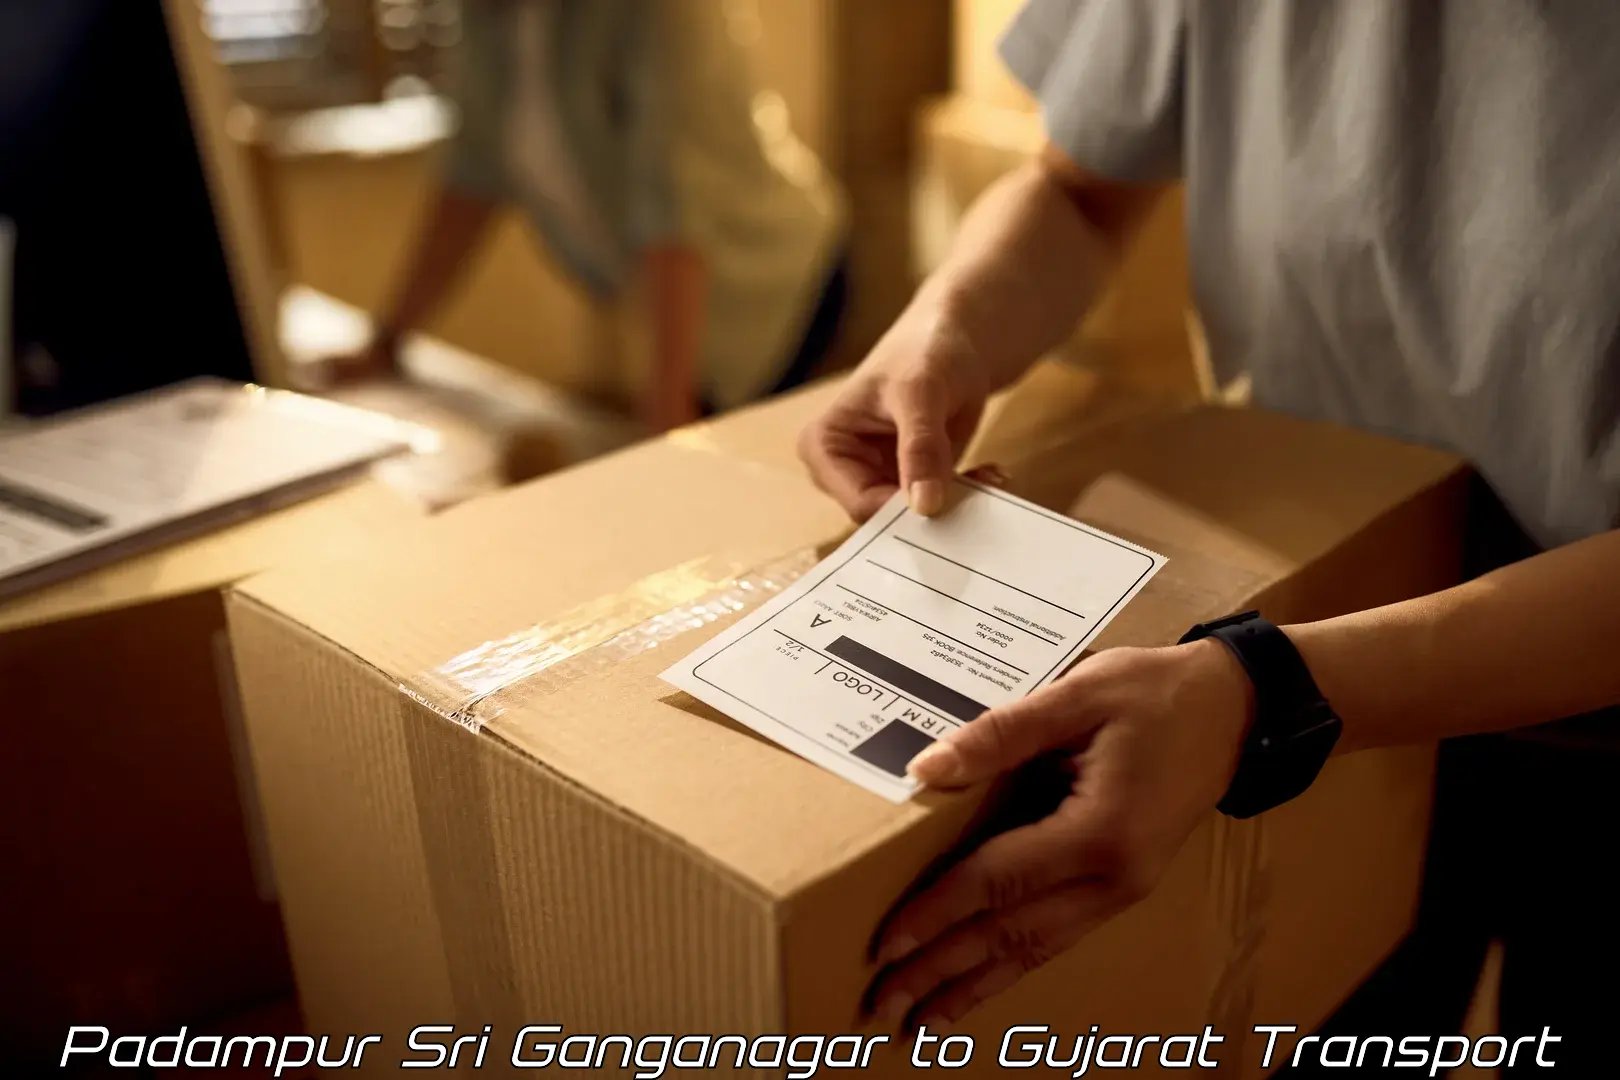 Daily transport service Padampur Sri Ganganagar to Gujarat